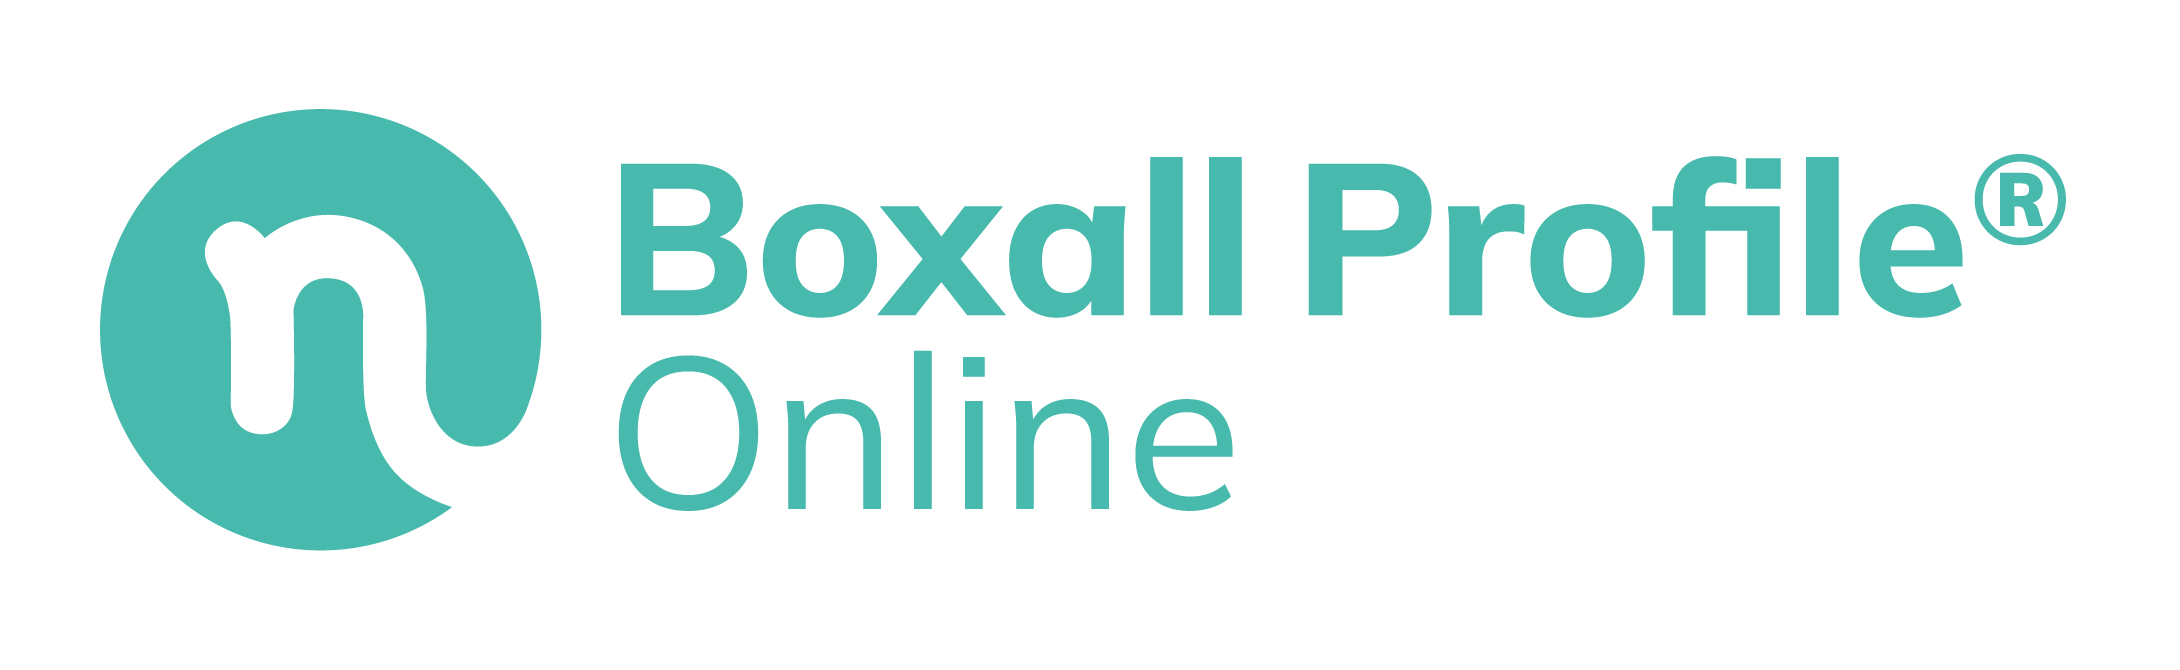 Boxall Profile logo